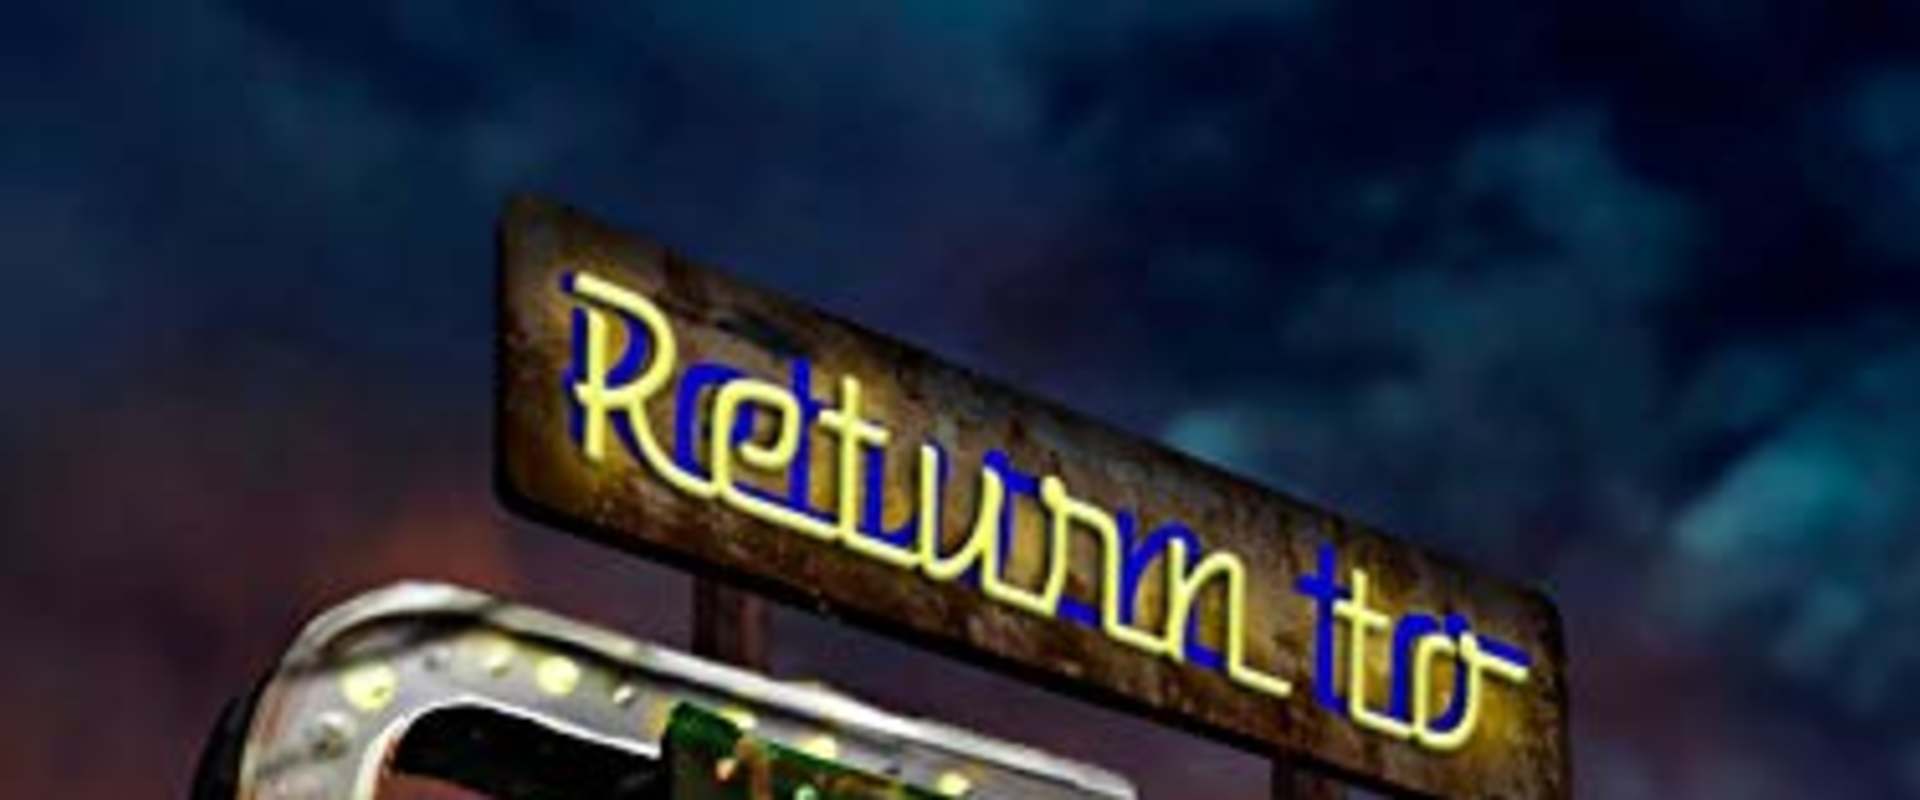 Return to Horror Hotel background 1